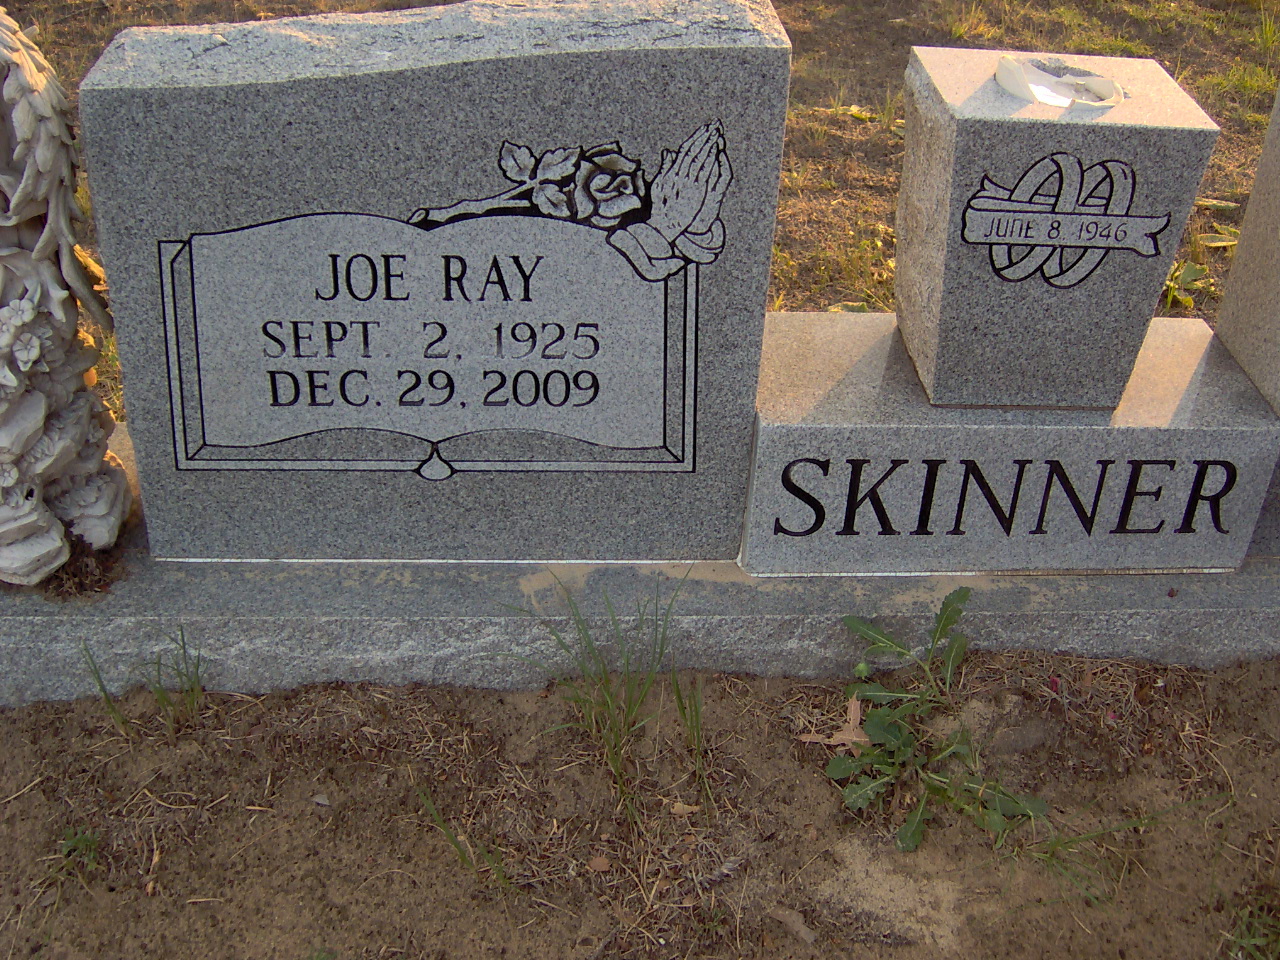 Headstone for Skinner, Joe Ray